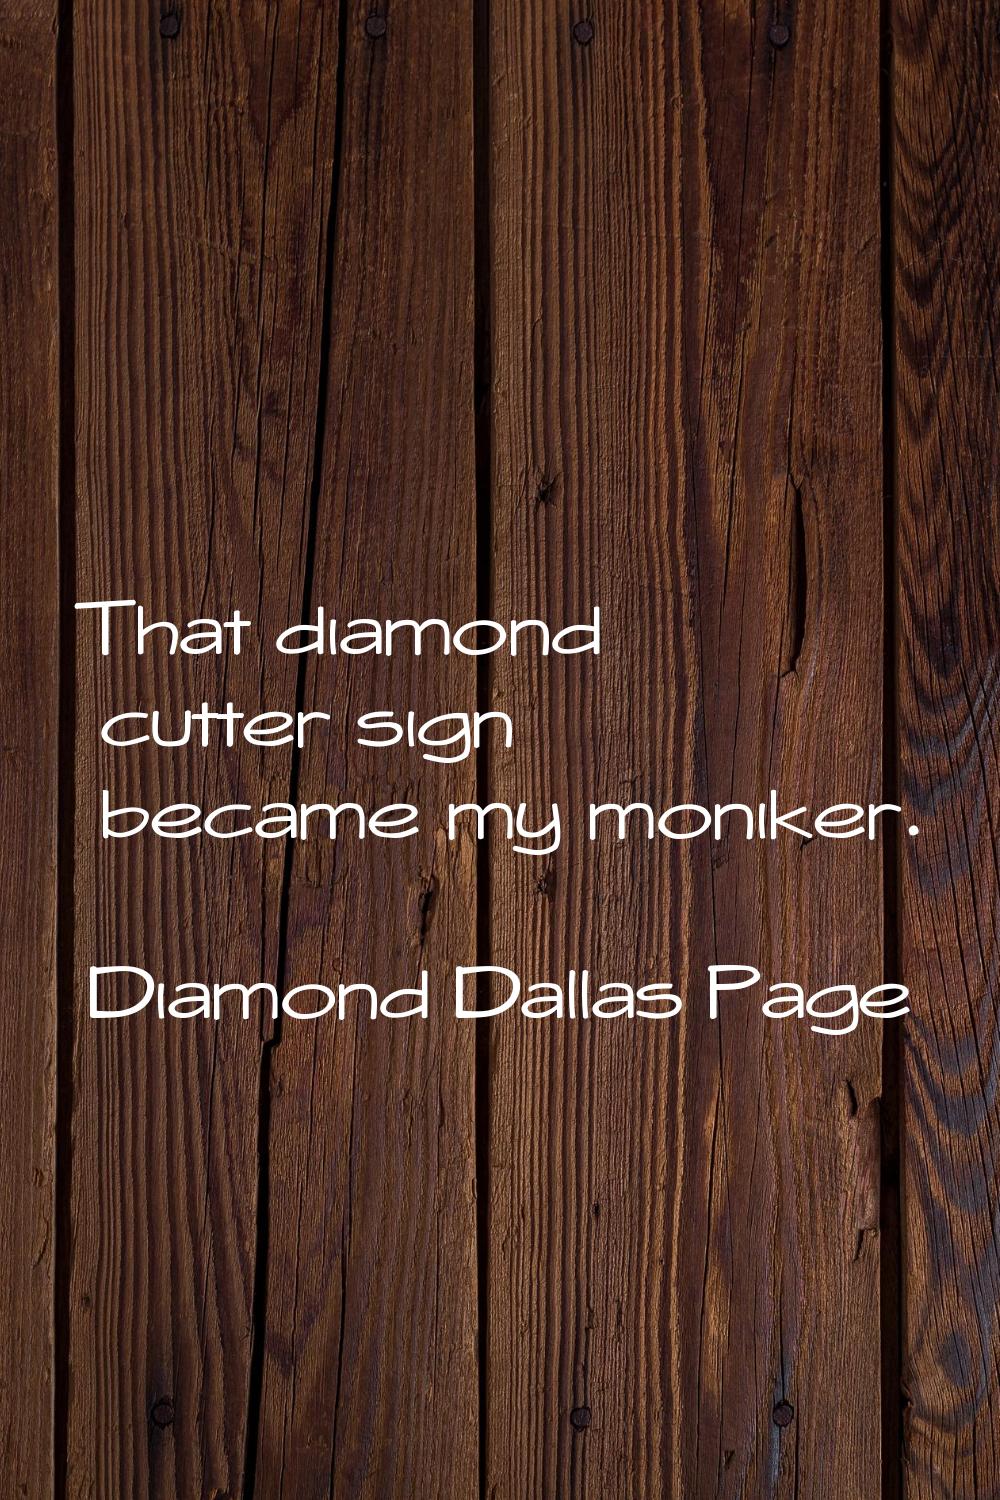 That diamond cutter sign became my moniker.